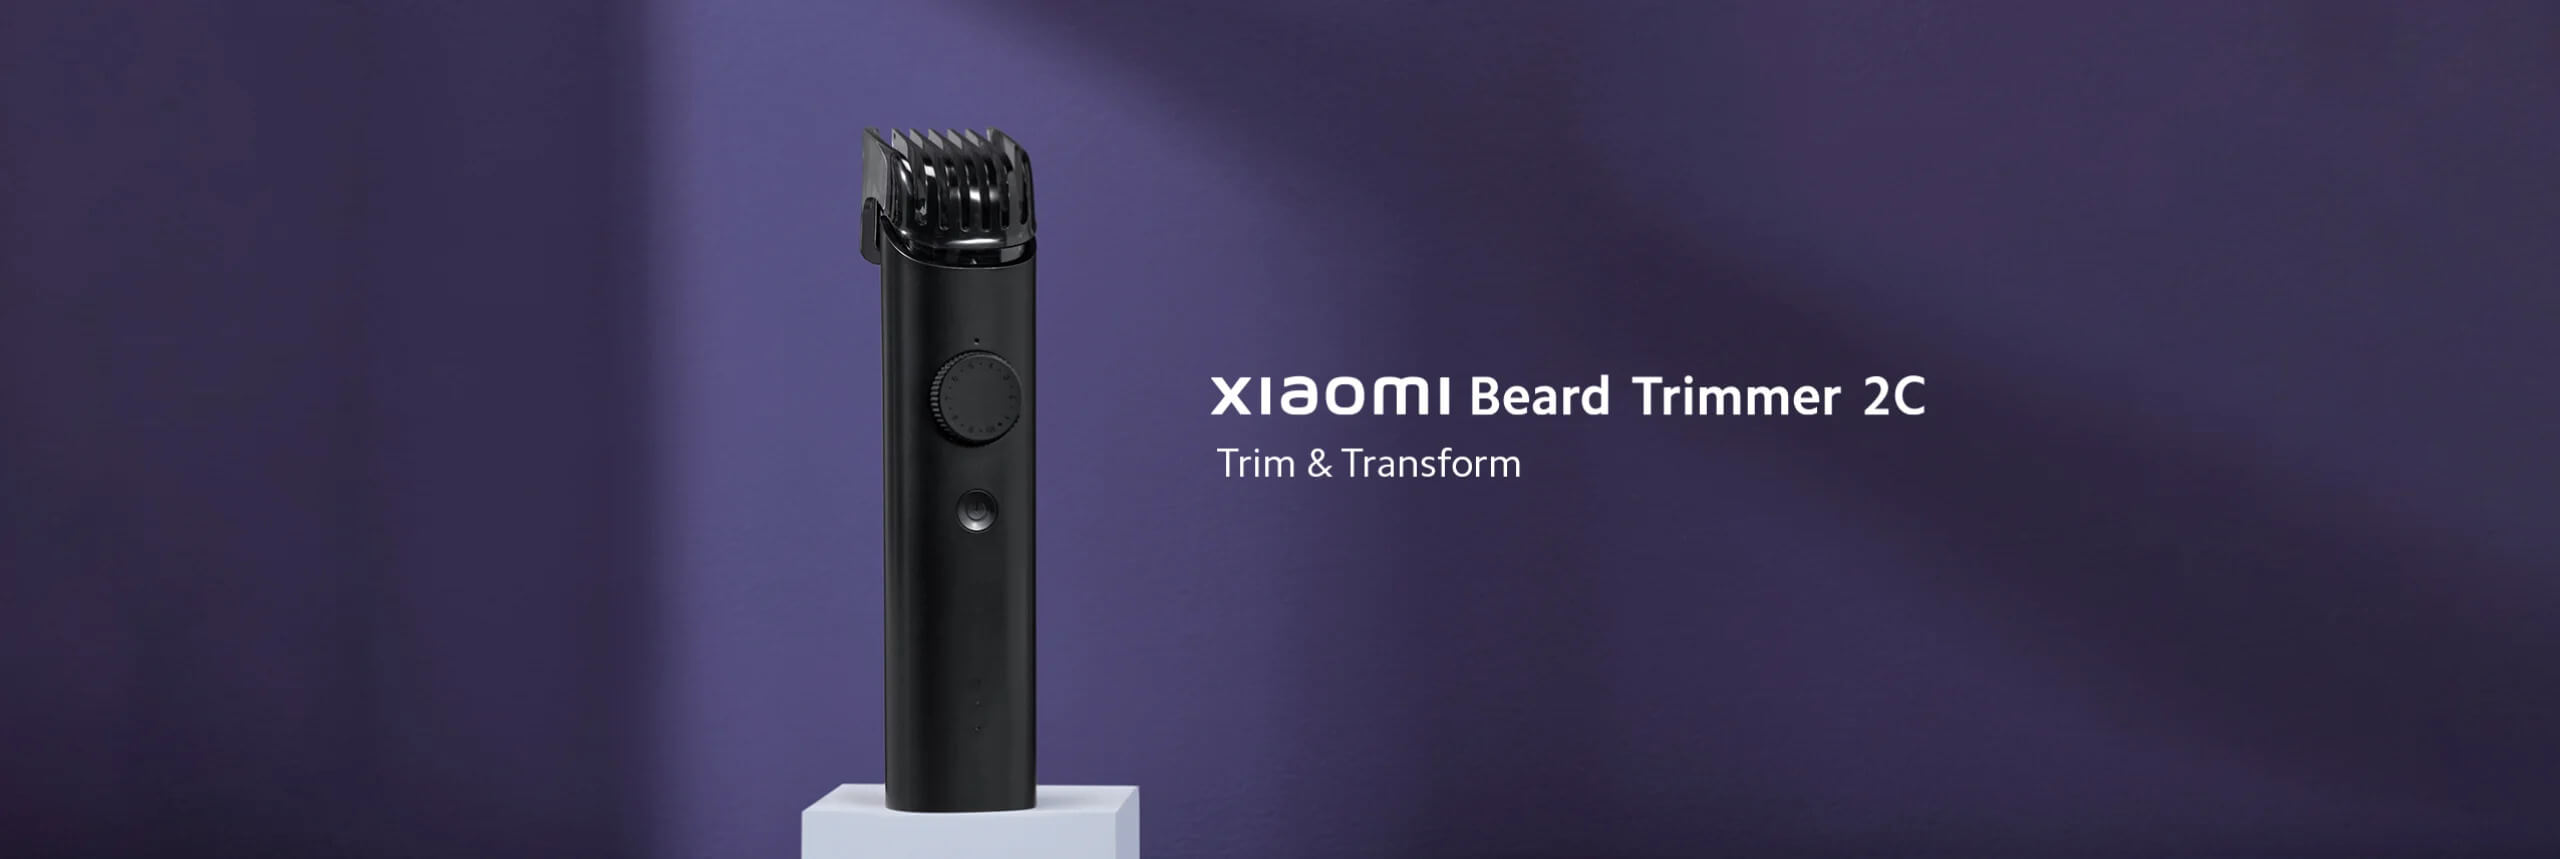 Xiaomi-Mi-Beard-Trimmer-2C-Main